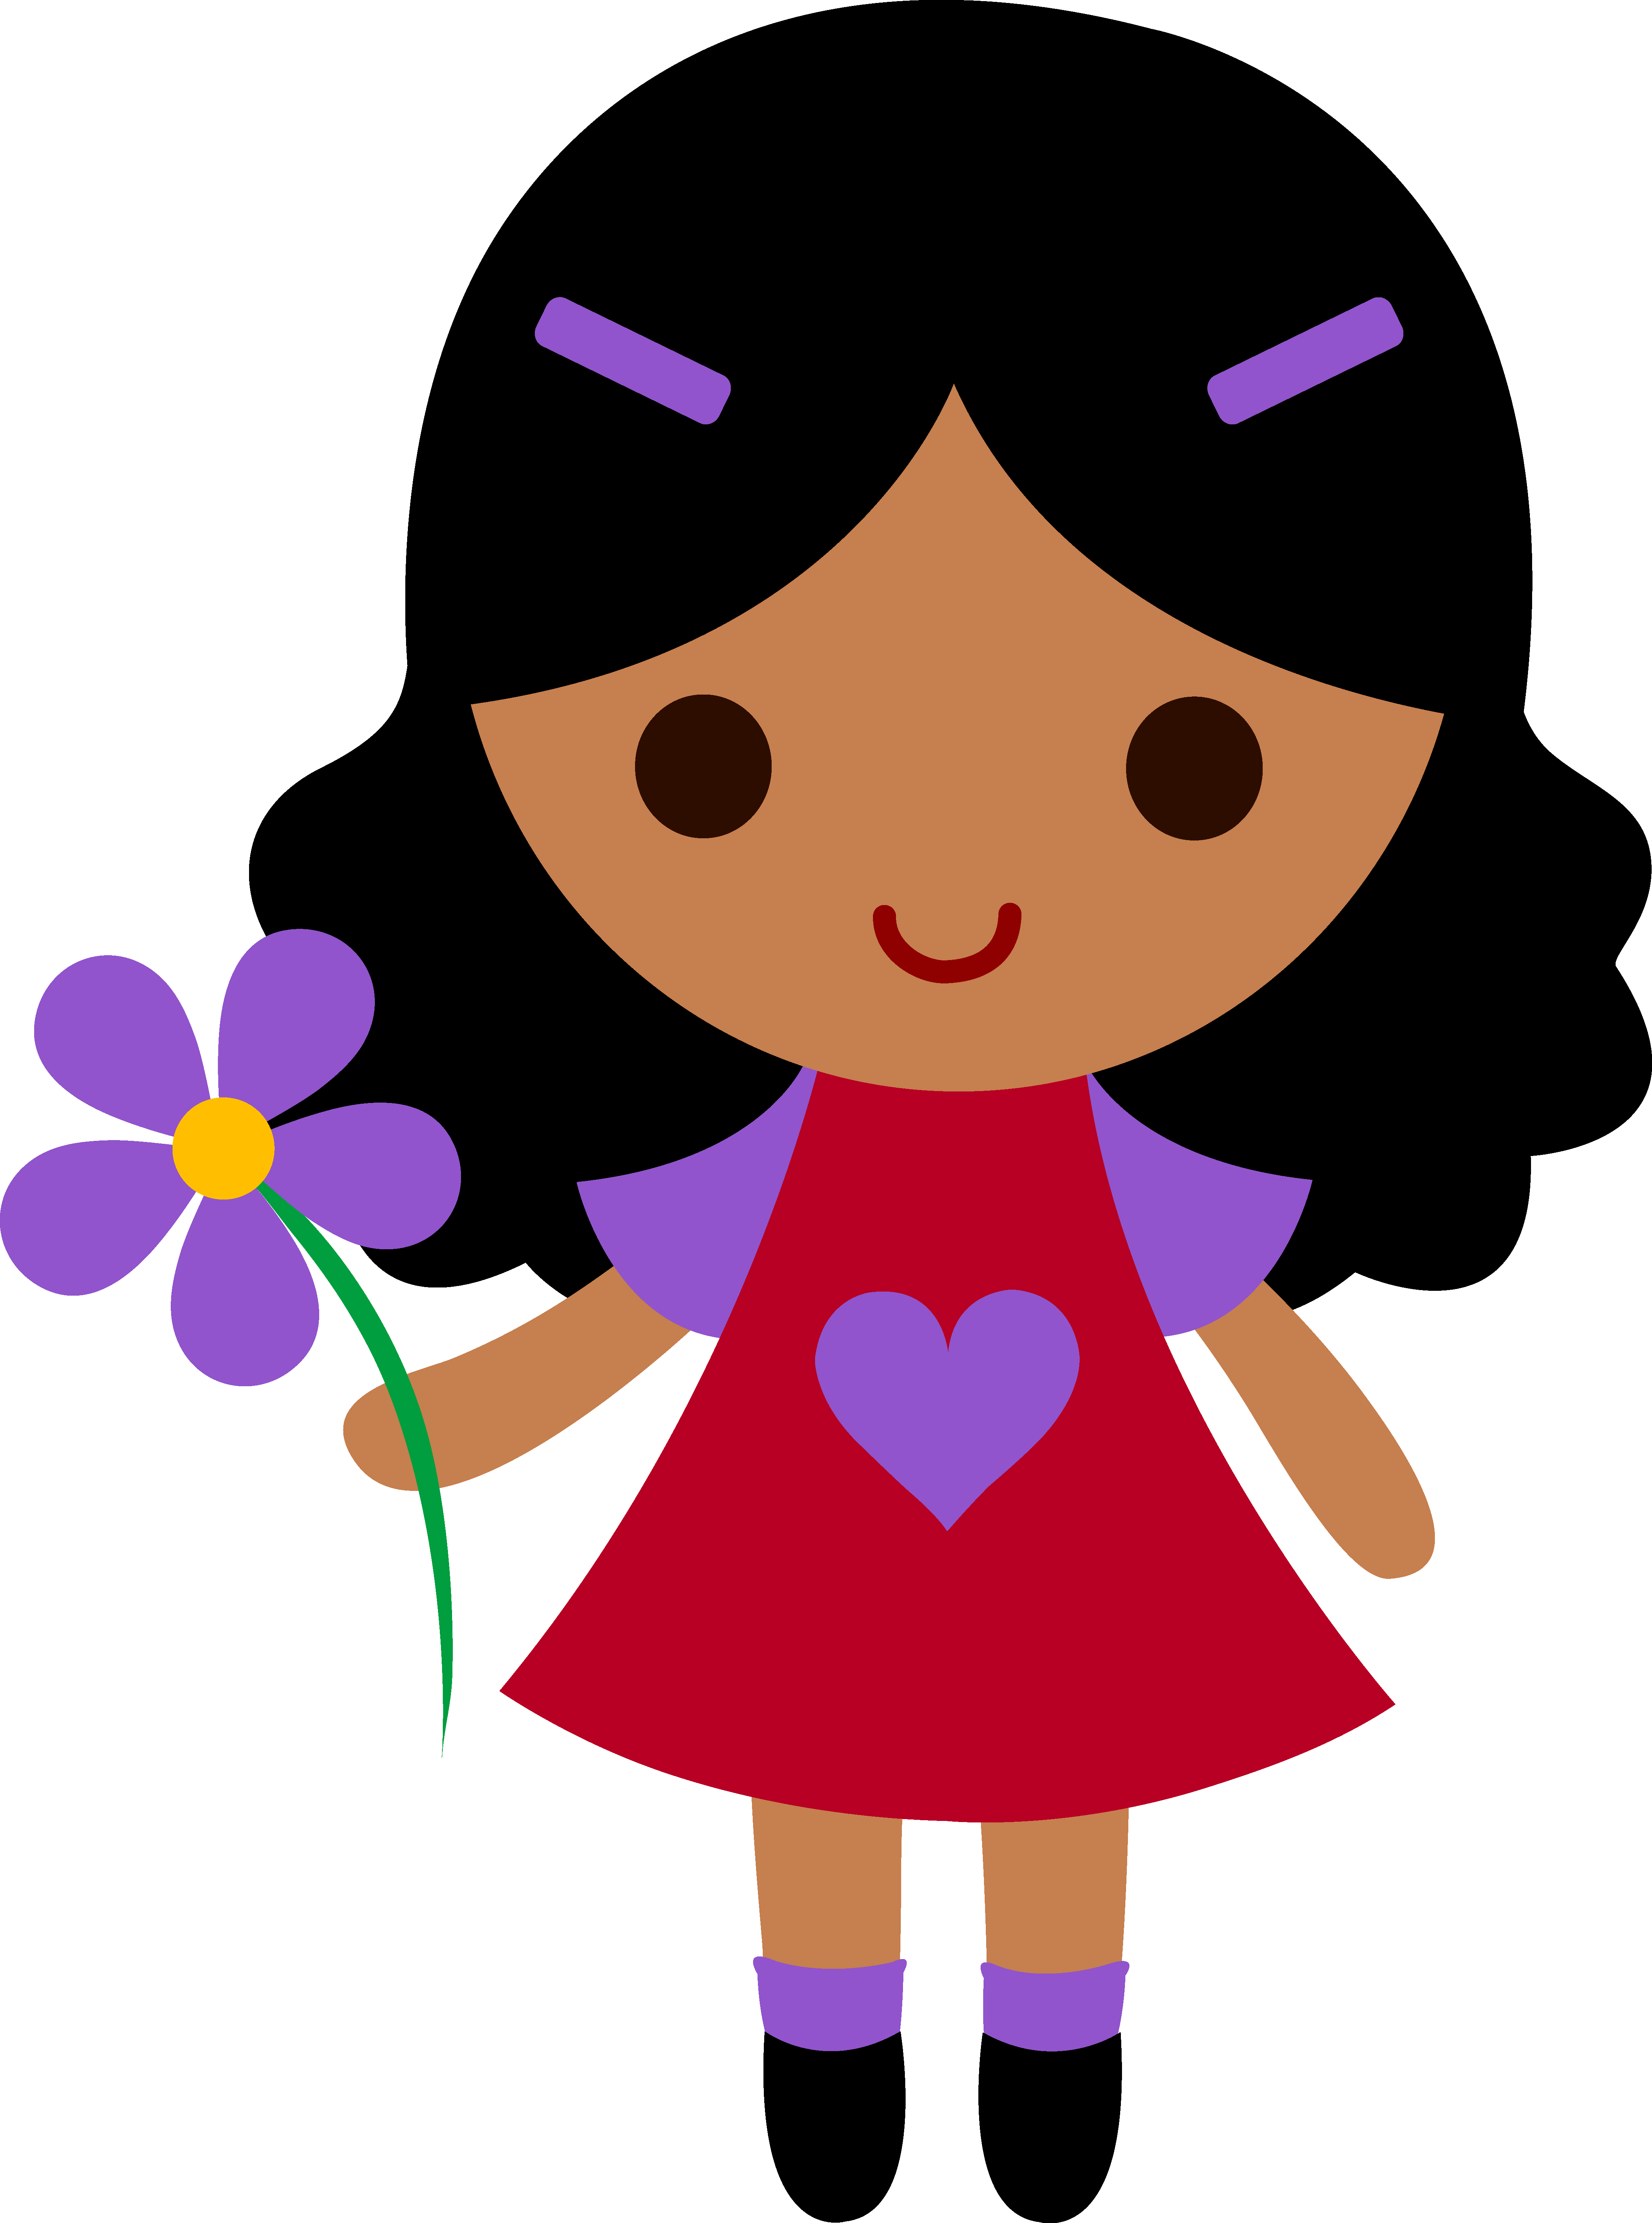 My clip art of a little girl holding a purple flower.